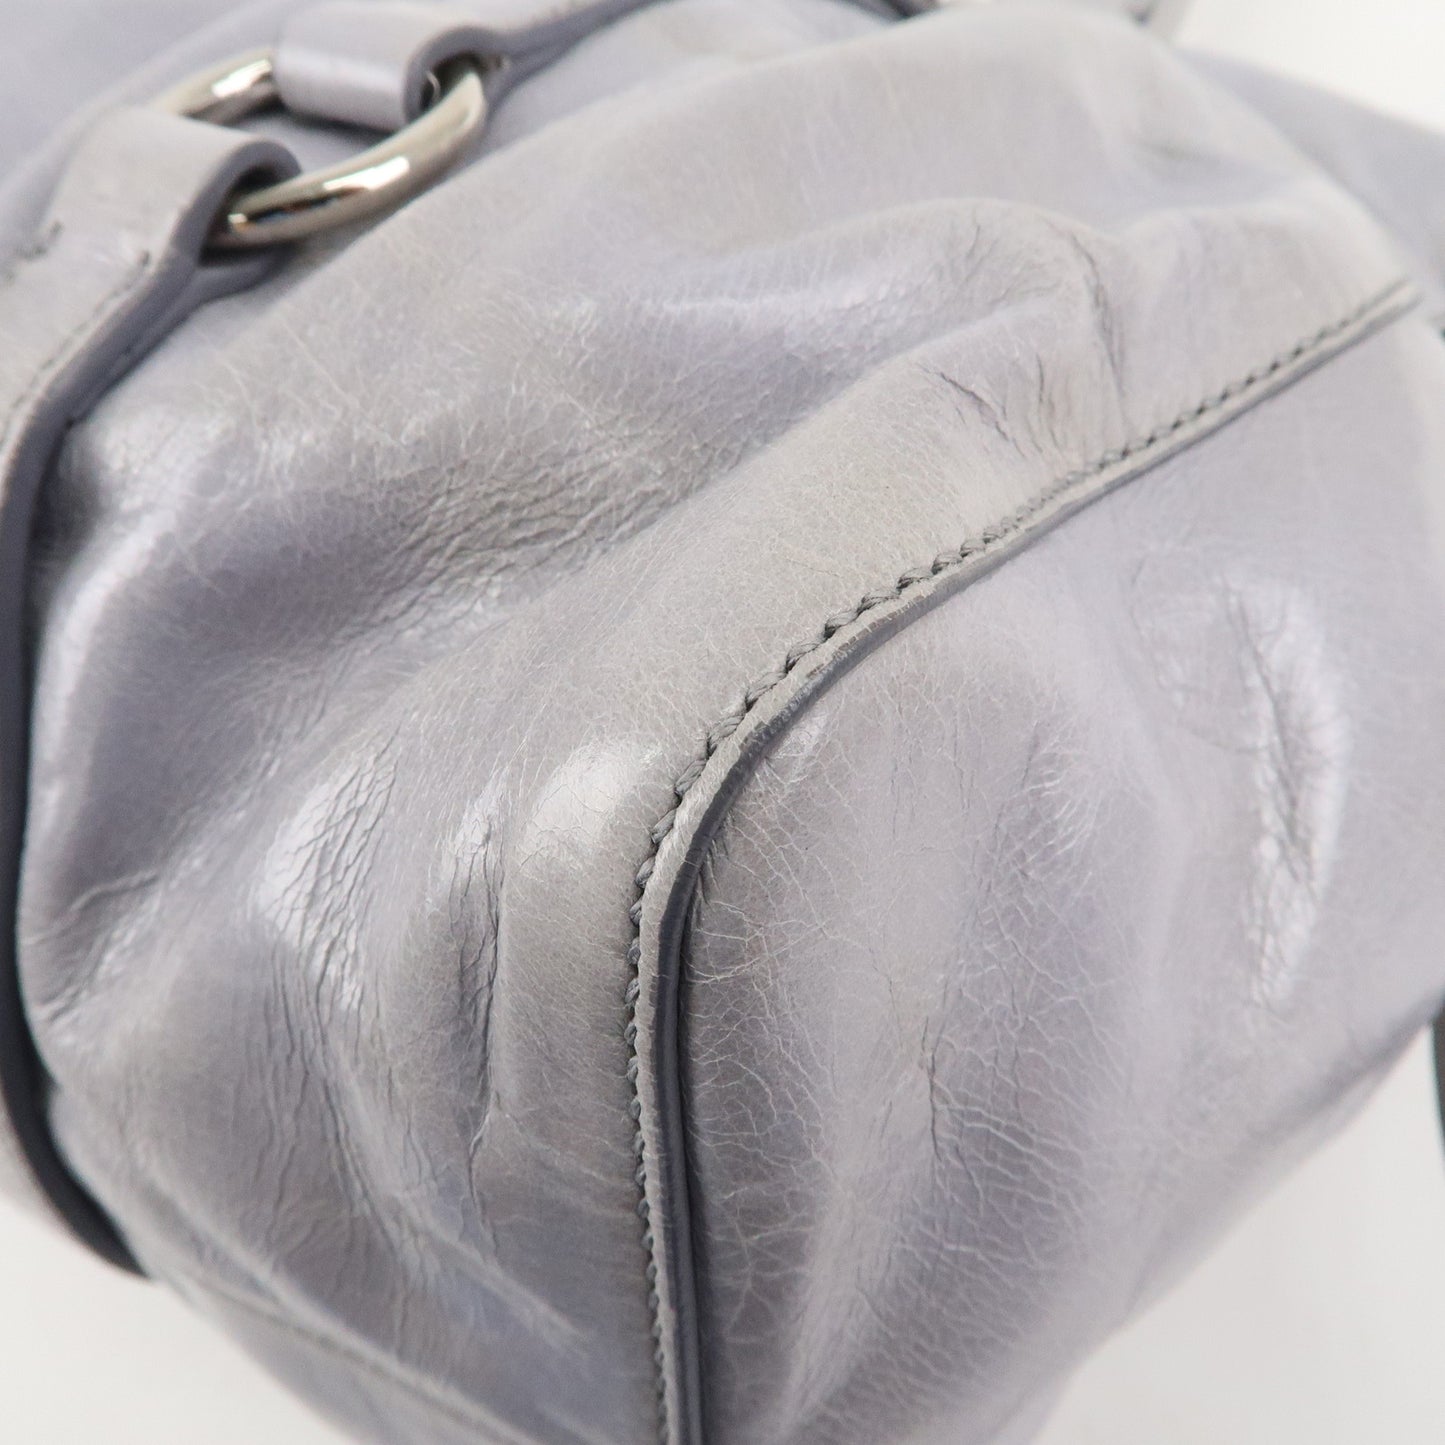 MIU MIU Leather 2Way Shoulder Bag Hand Bag Gray RT0383